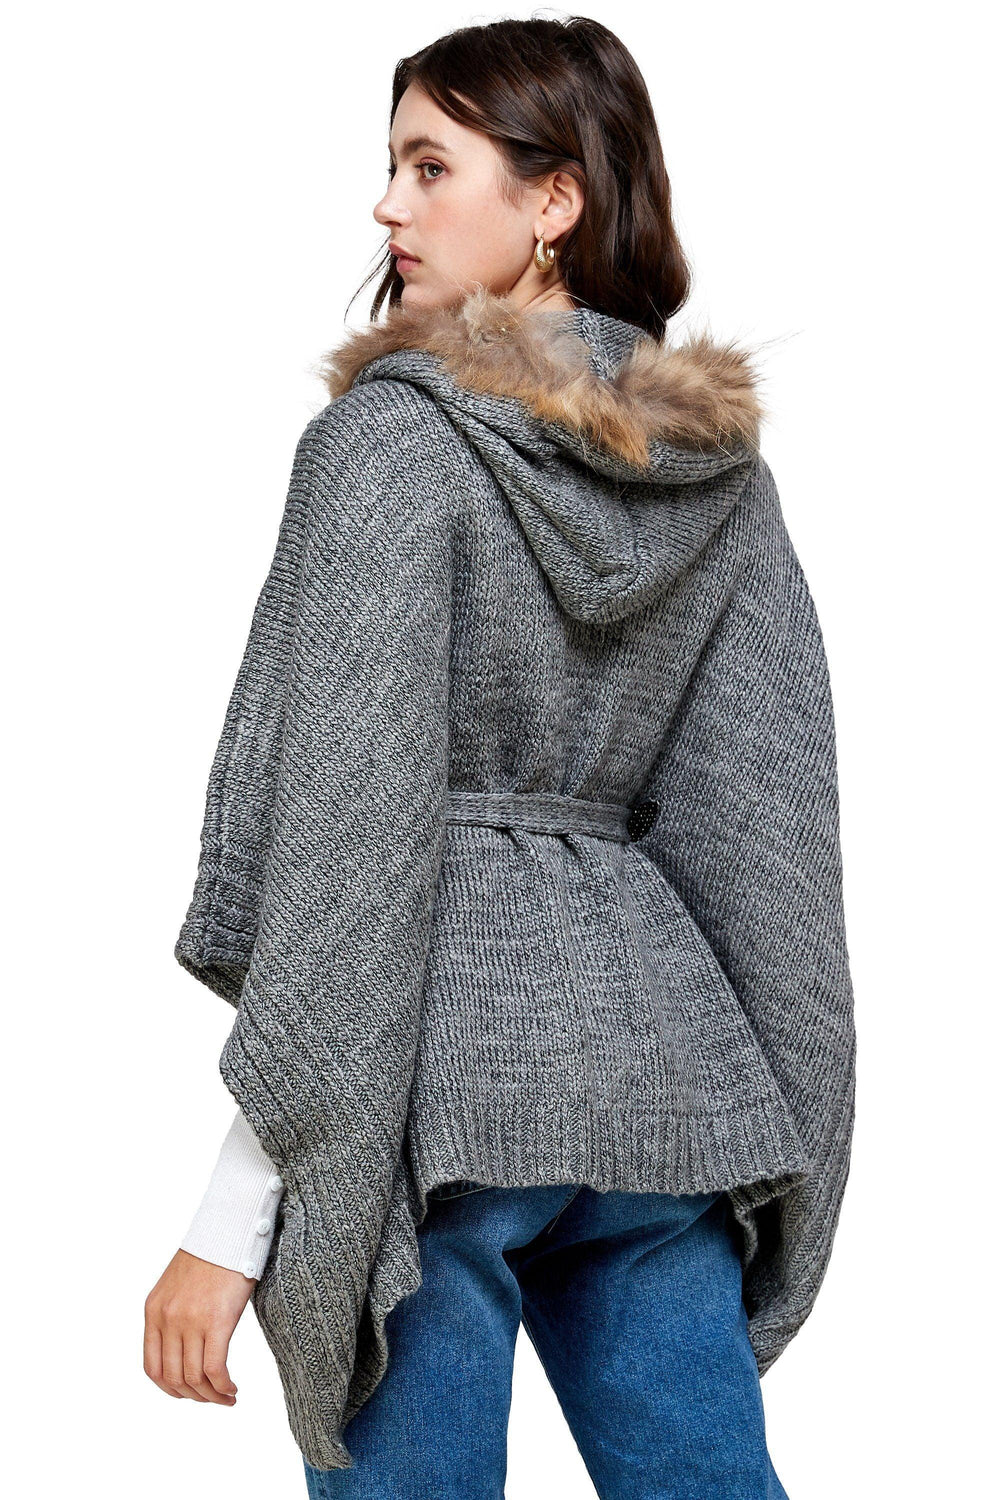 Hoodie Poncho Sweater Cardigan Fur Trim Top - Brand My Case